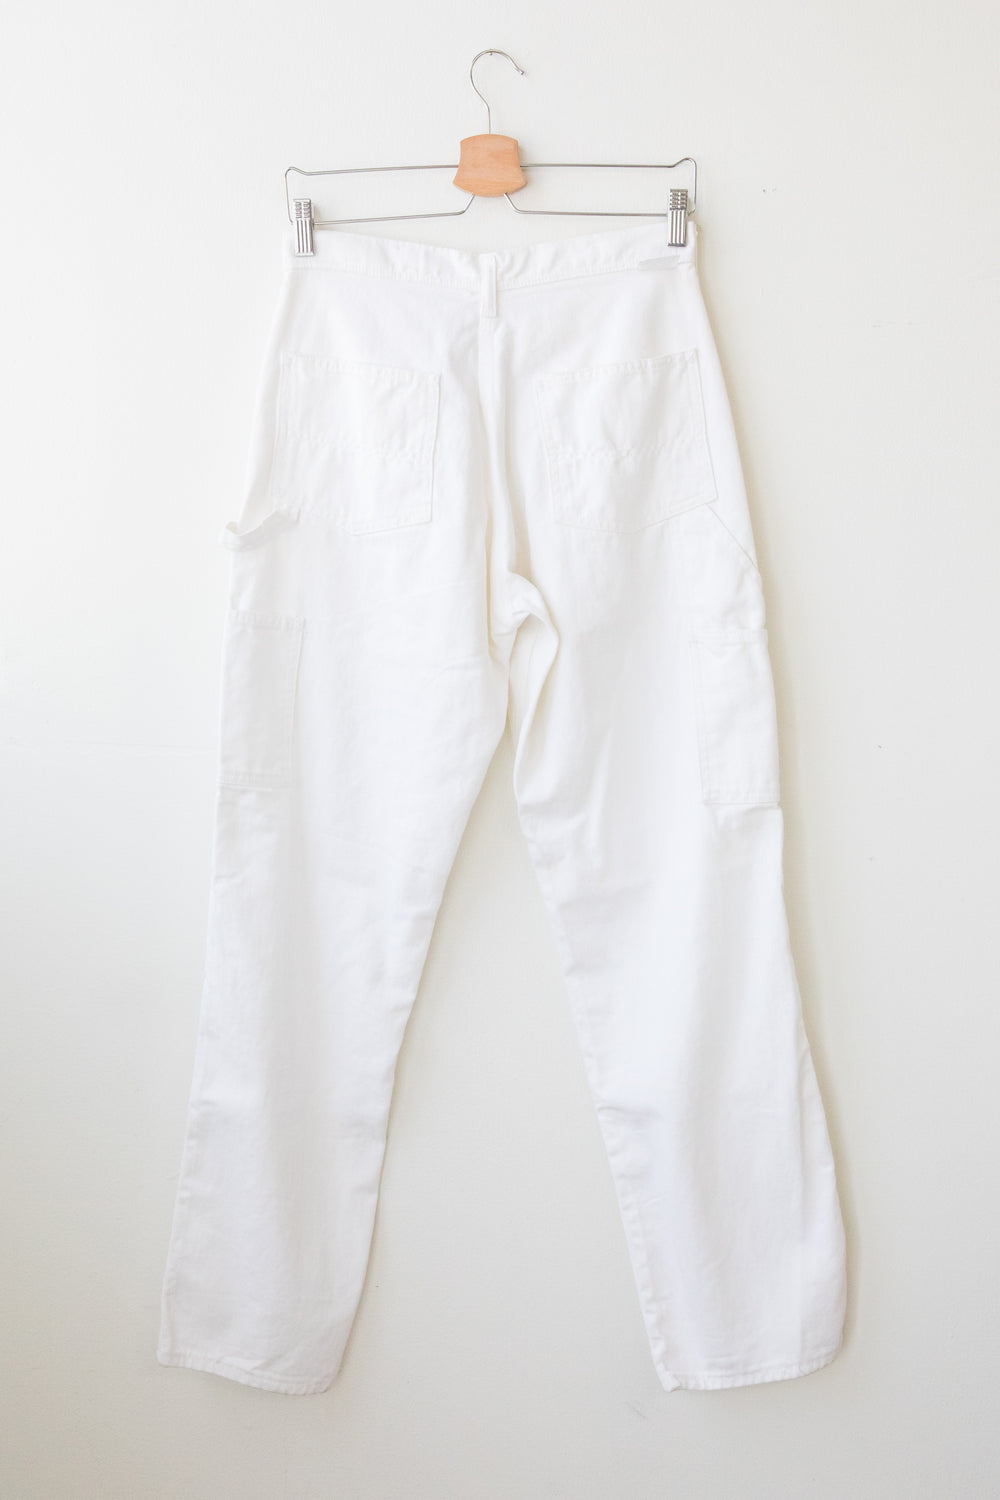 Vintage White Painter Pants